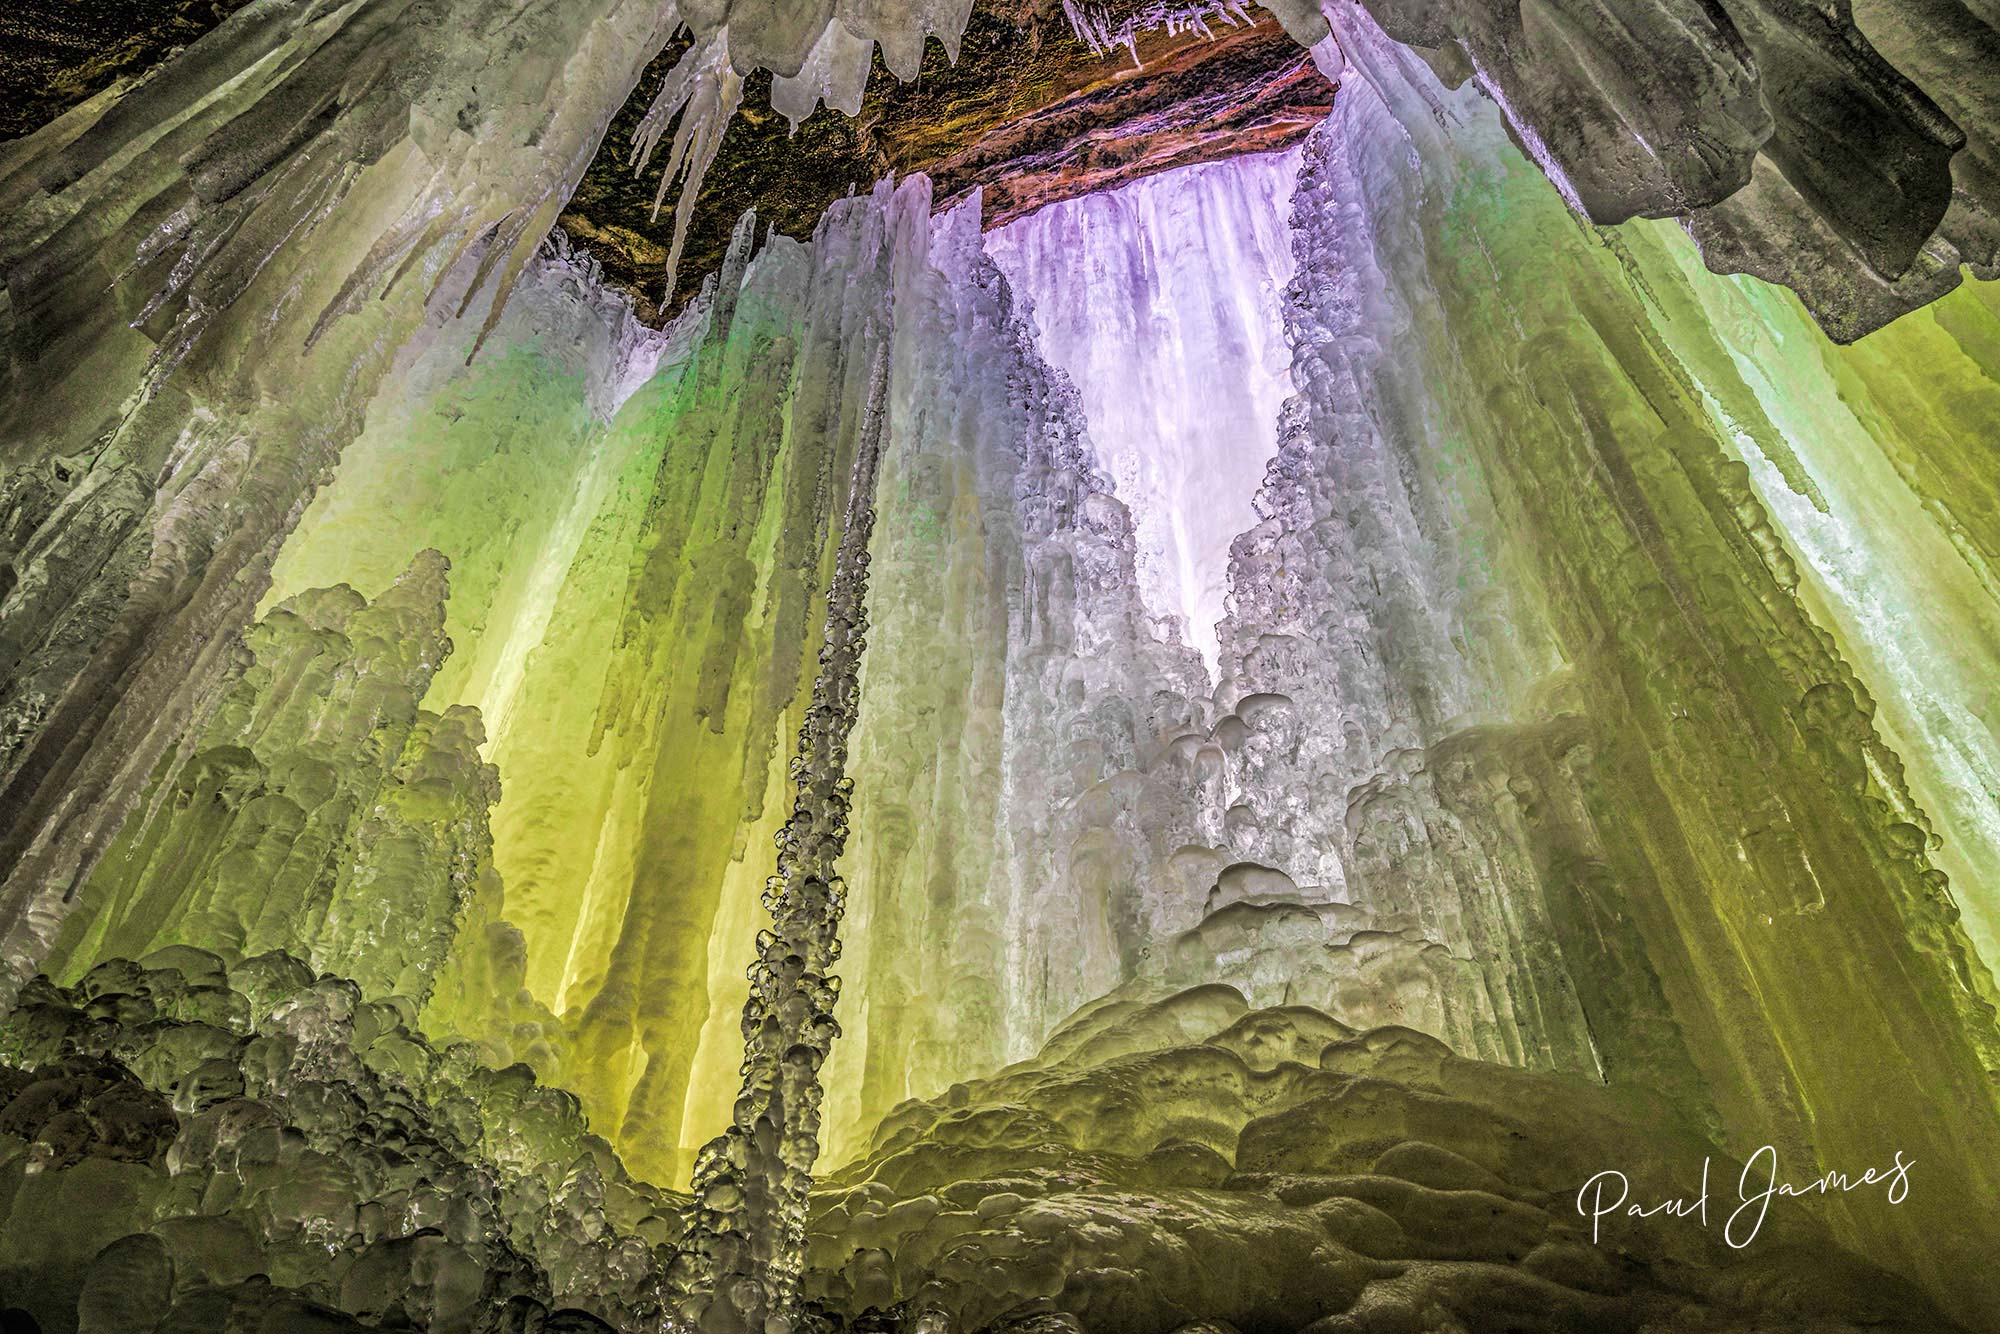 Frozen Waterfalls Ice Cave /Dark Sky Photographic field workshop